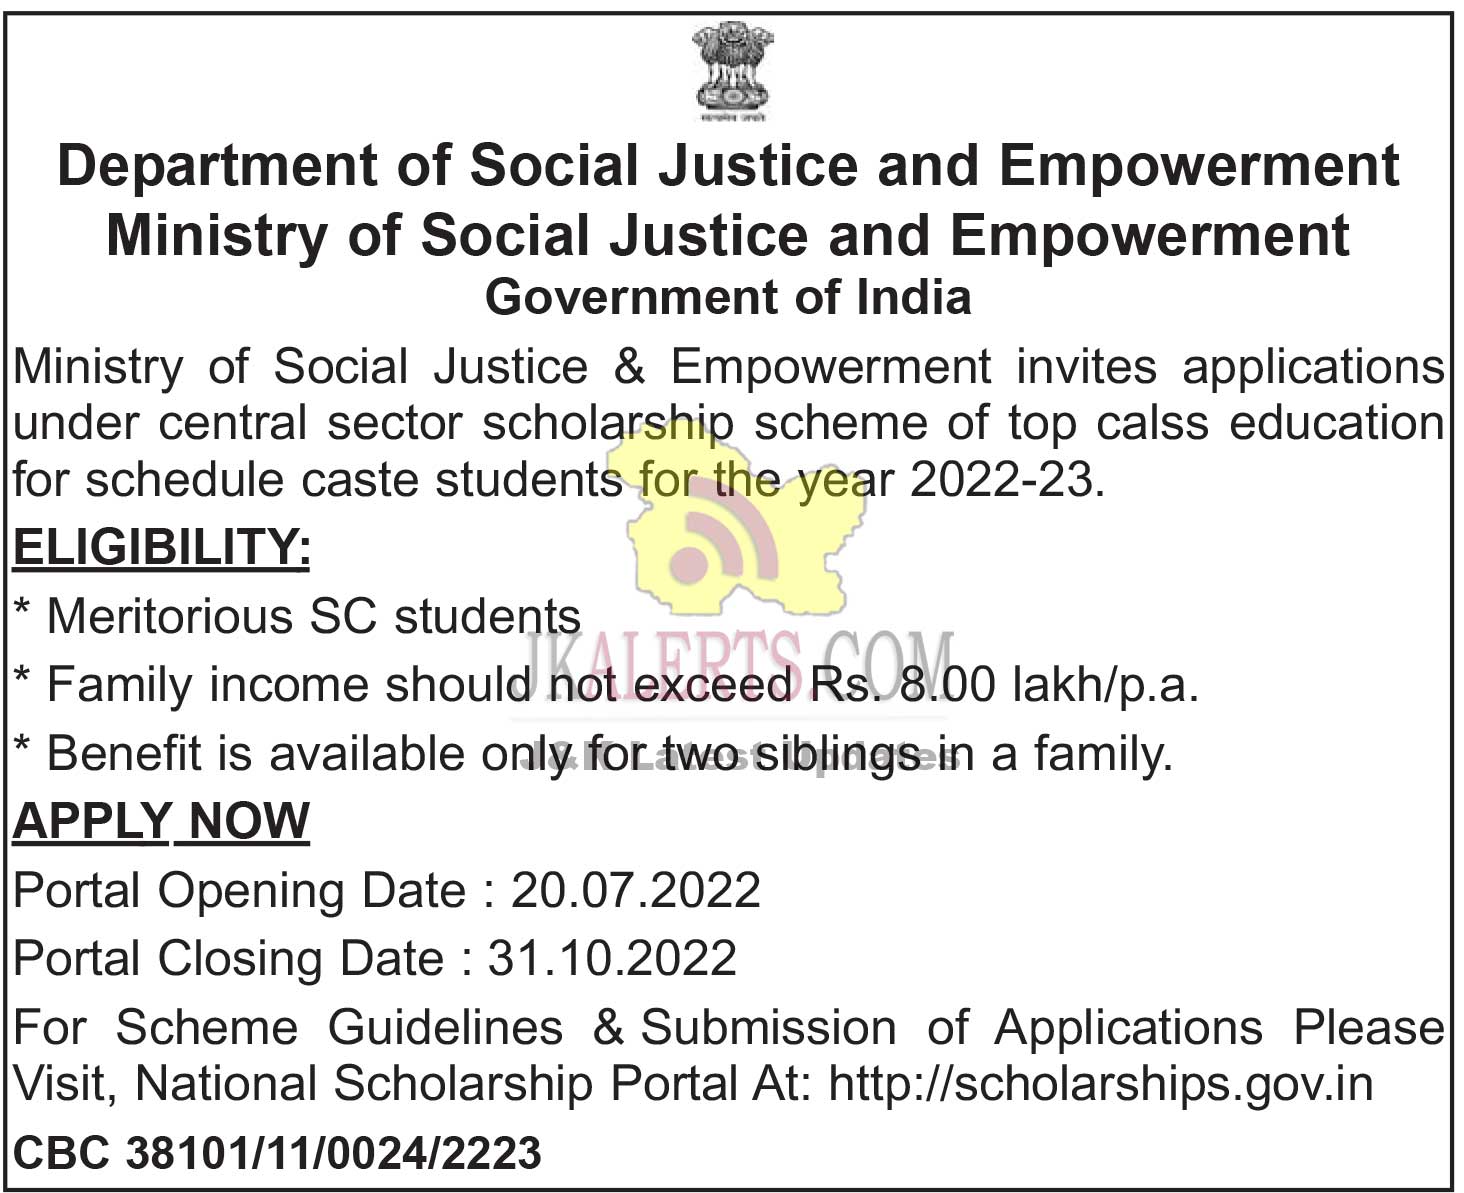 GOI MSJE Scholarship Scheme for SC students.